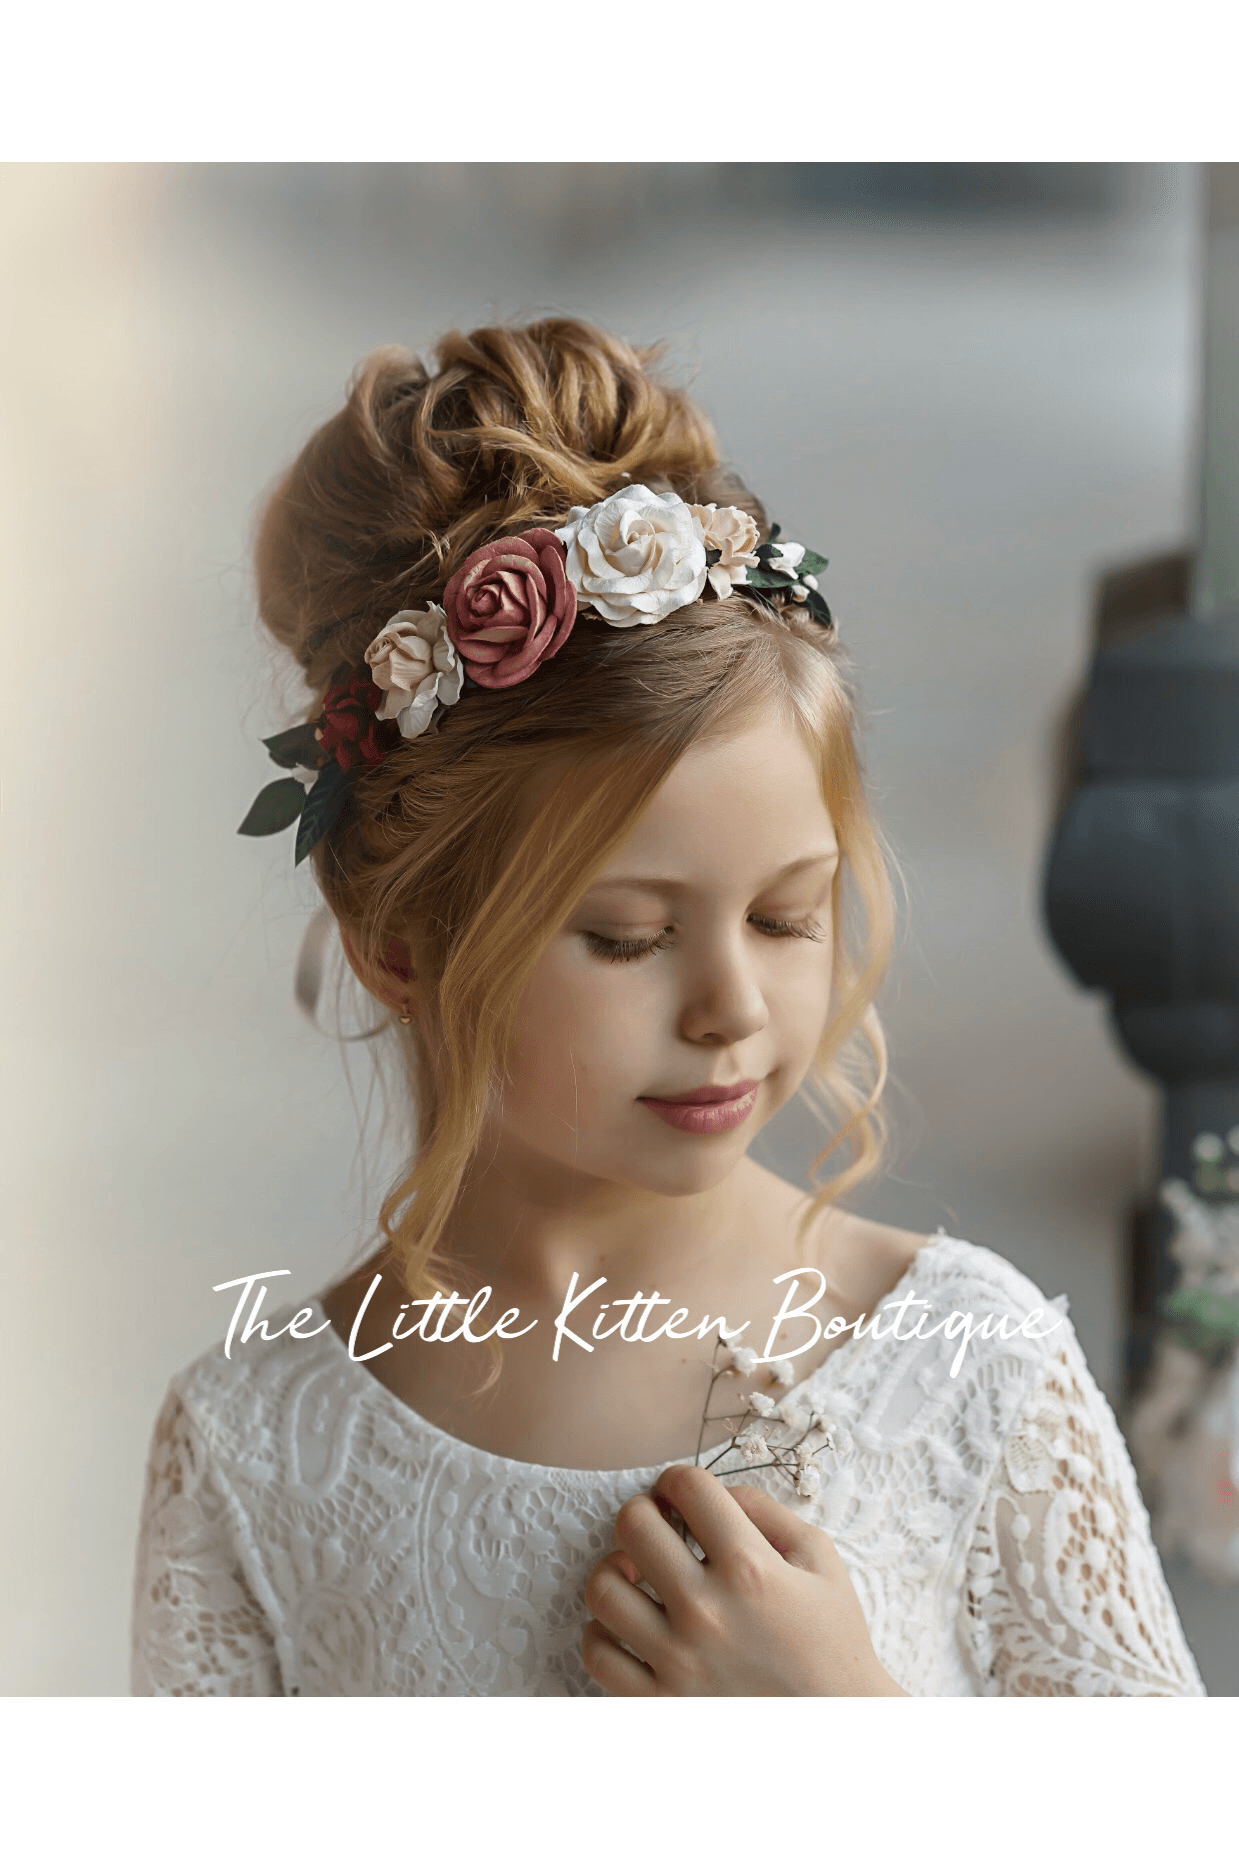 Flower Hair Wreaths / Wedding Hair Accessories - The Little Kitten Boutique